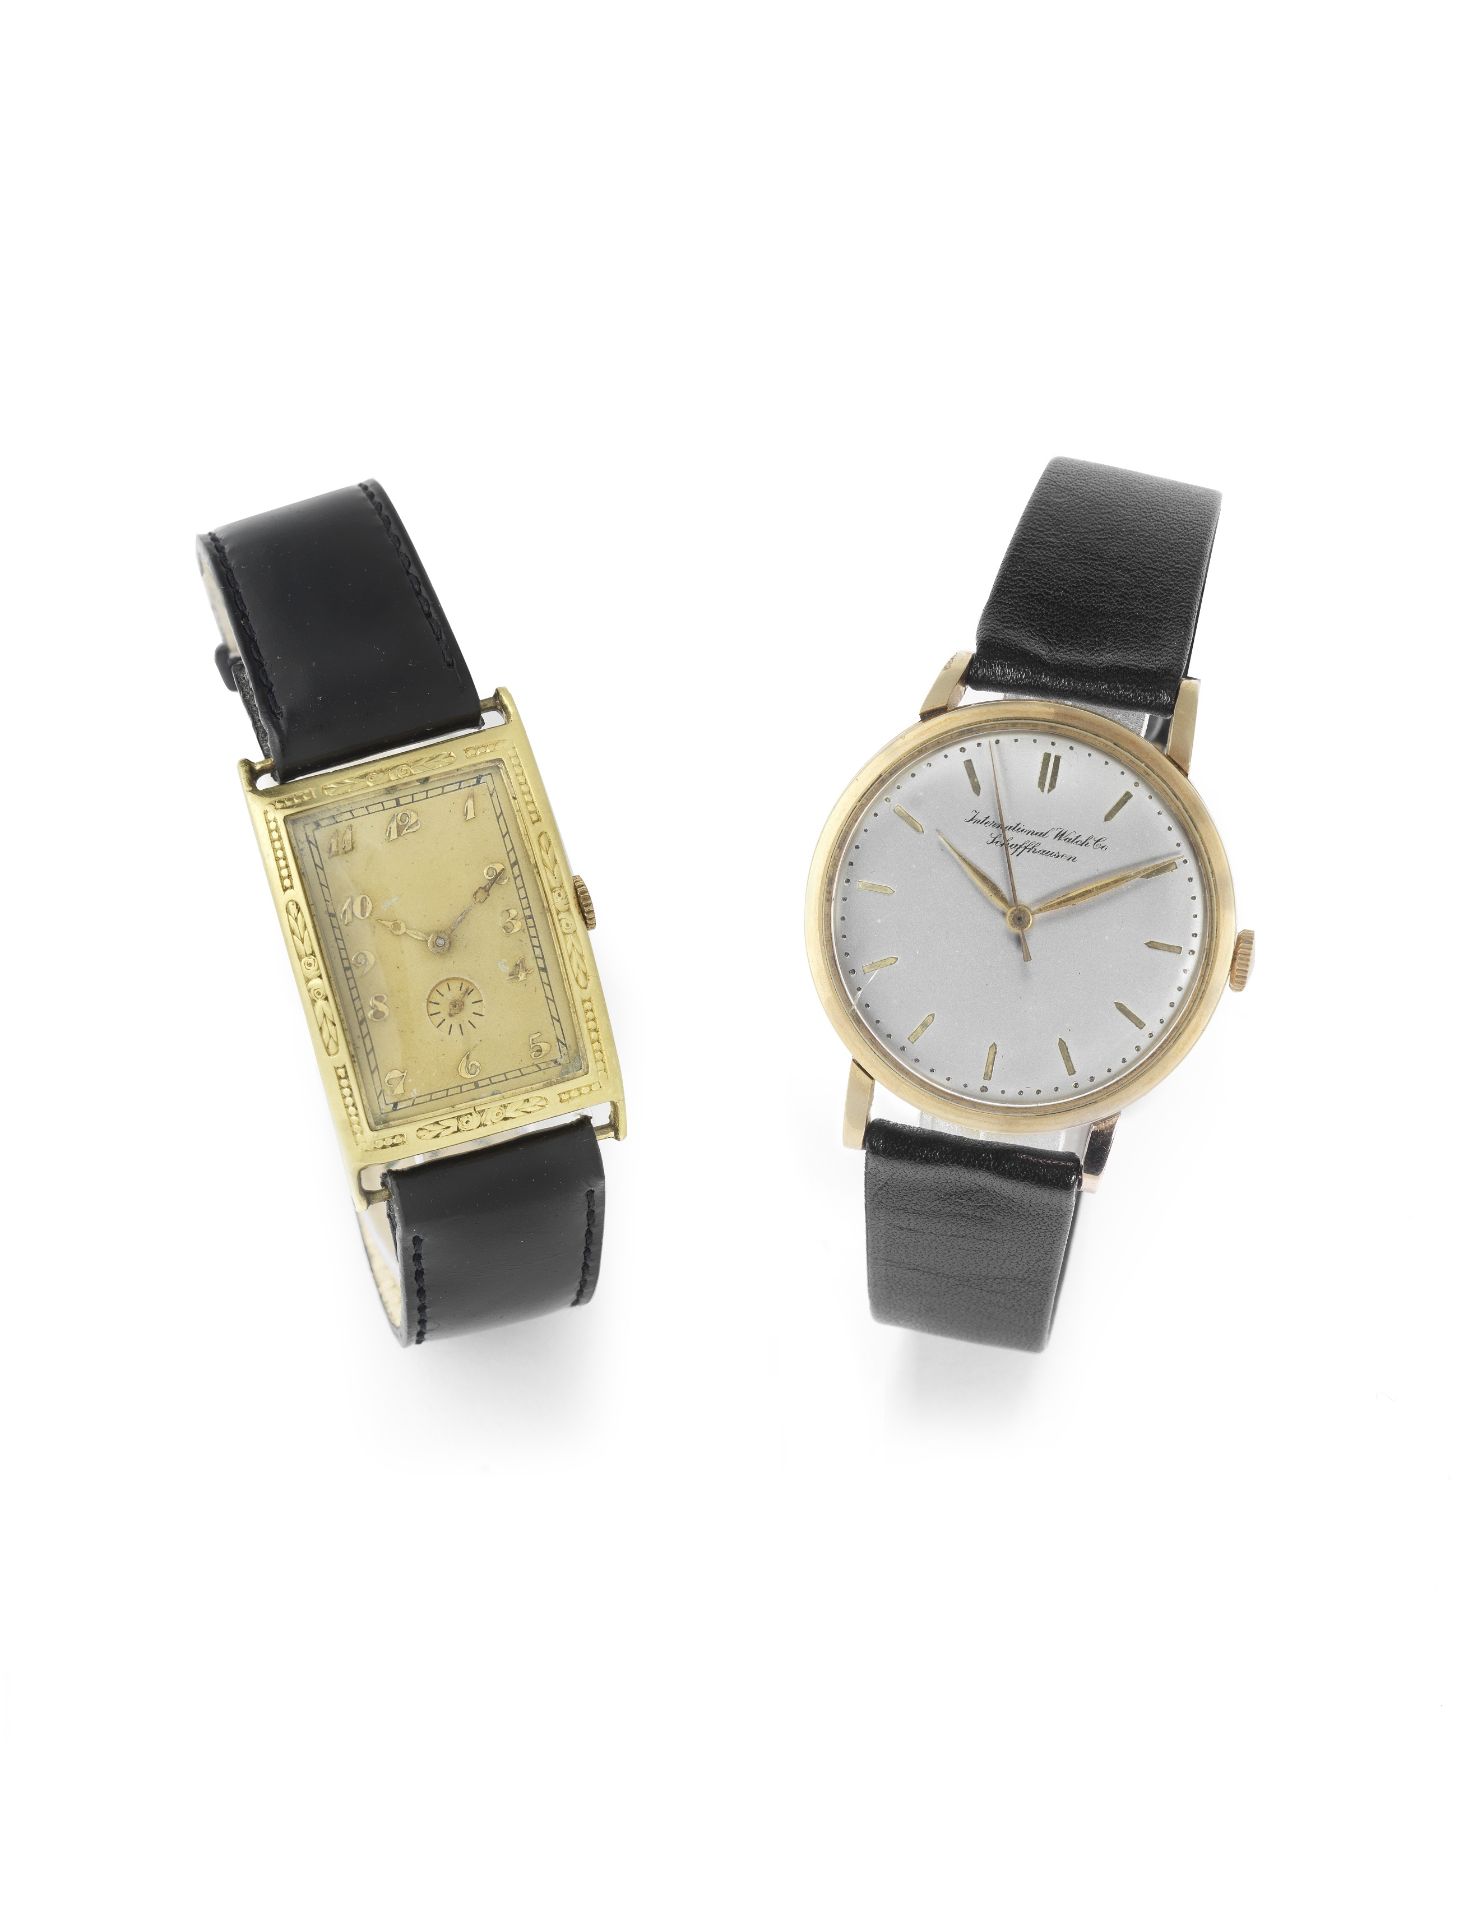 The International Watch & Co. An 18K gold manual wind rectangular wristwatch with further Interna...